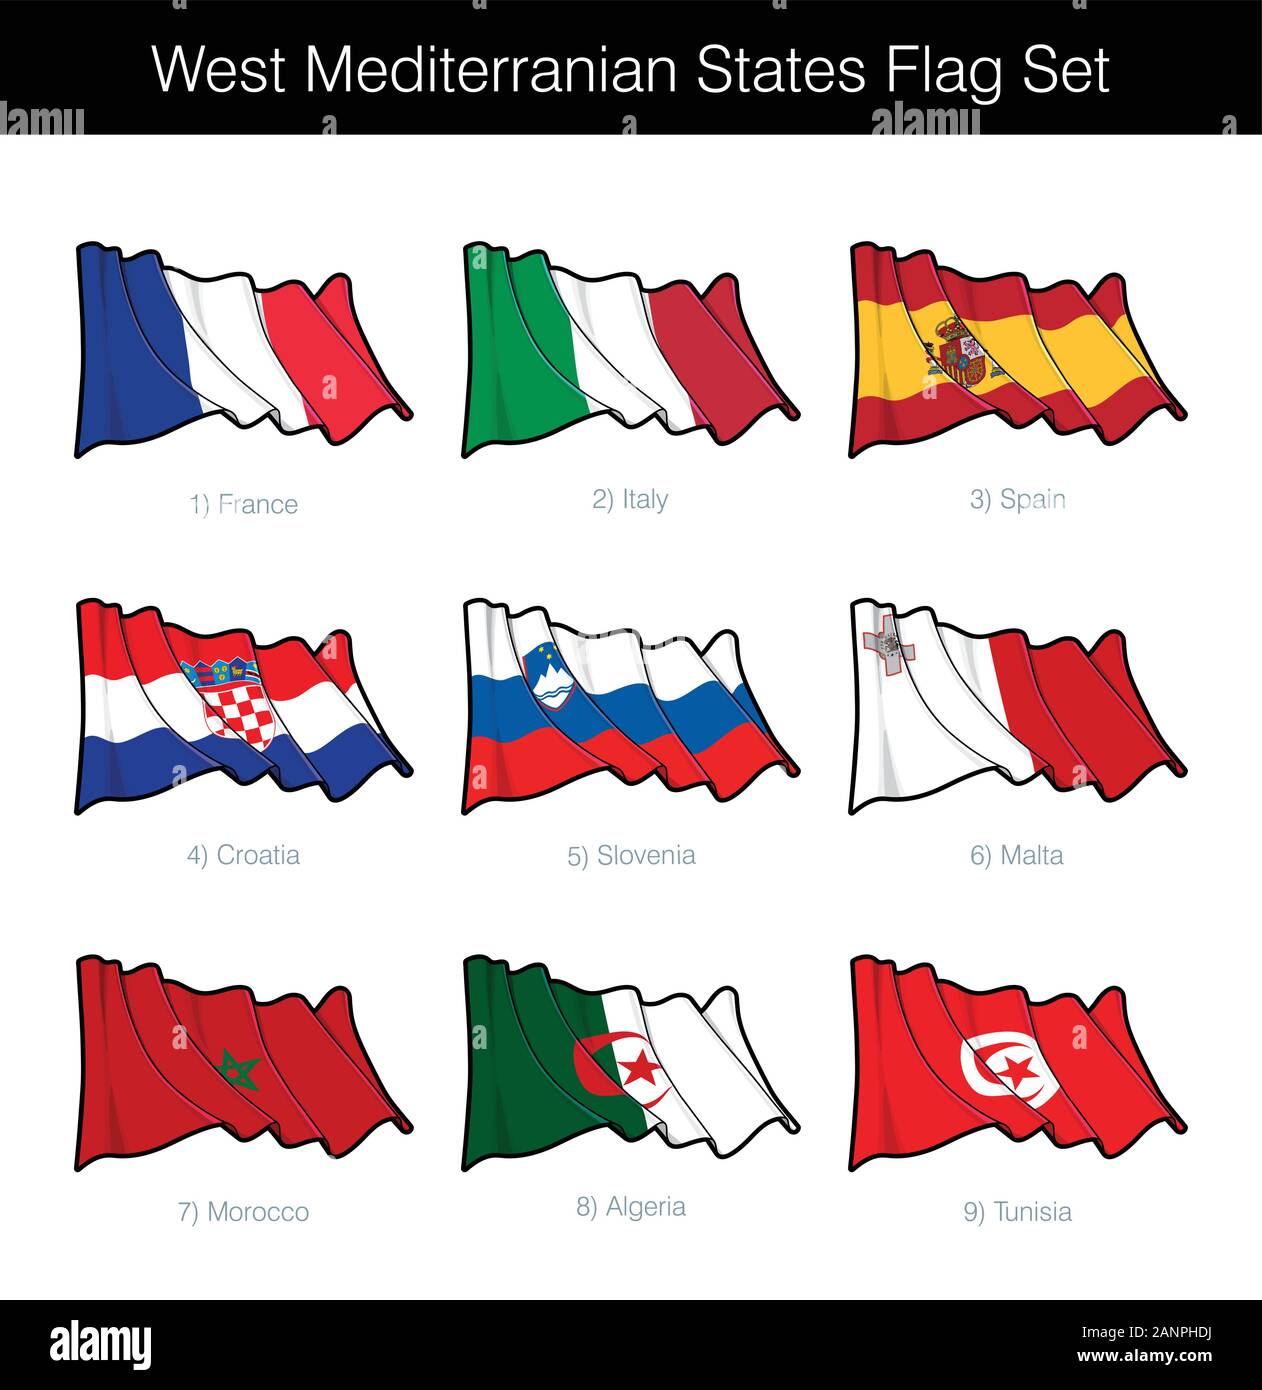 West Mediterranean States Waving Flag Set. The set includes the flags of France, Italy, Spain, Croatia, Slovenia, Malta, Morocco, Algeria n Tunisia. V Stock Vector